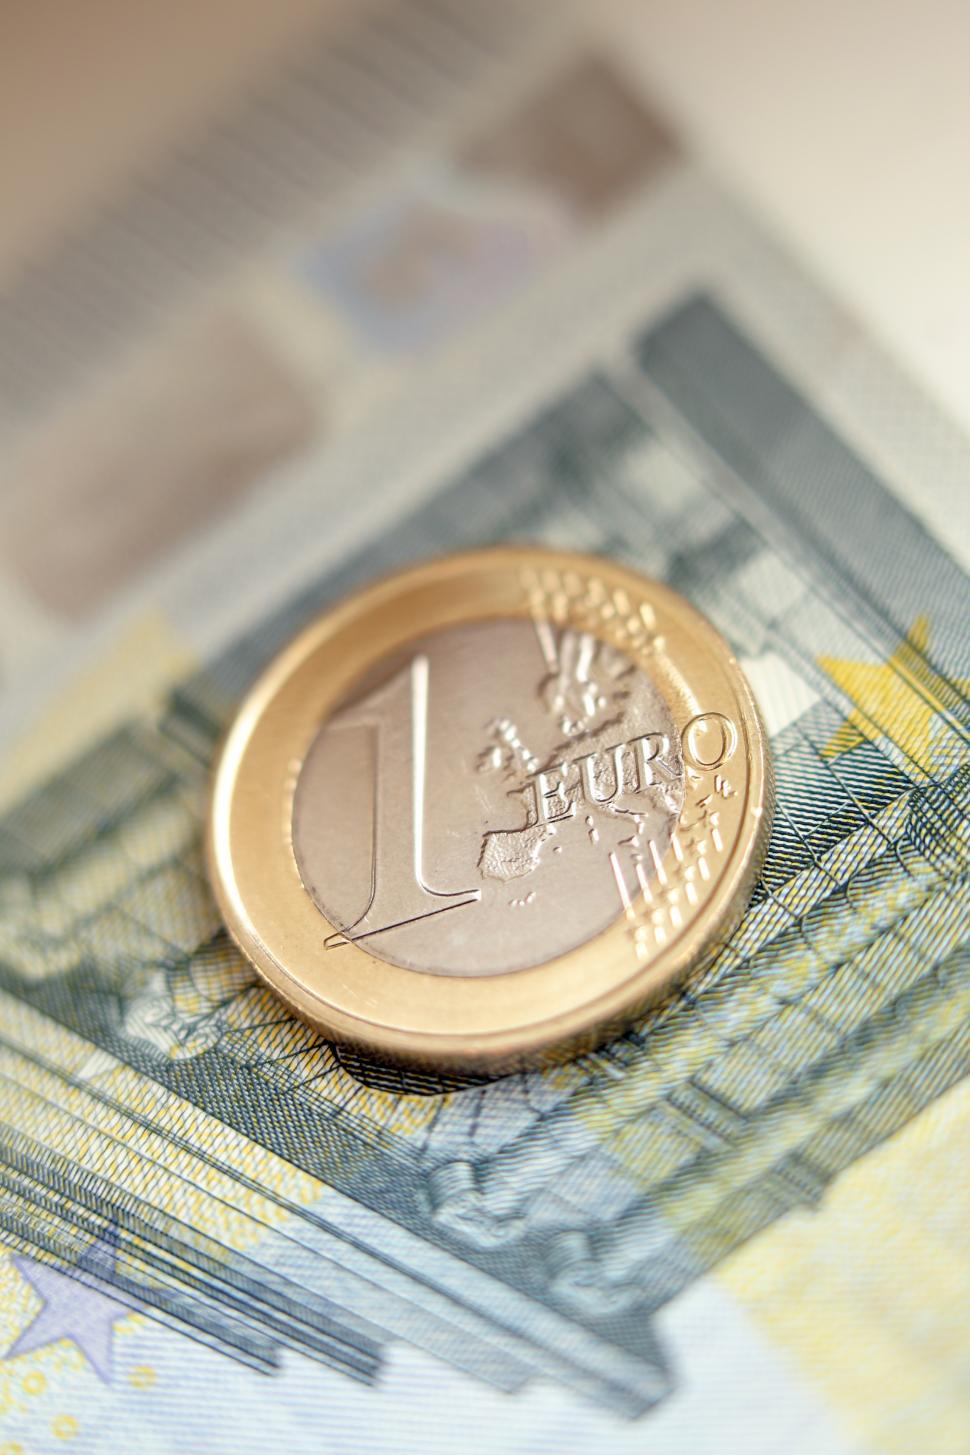 Free Image of Money, finances. Euro coin 